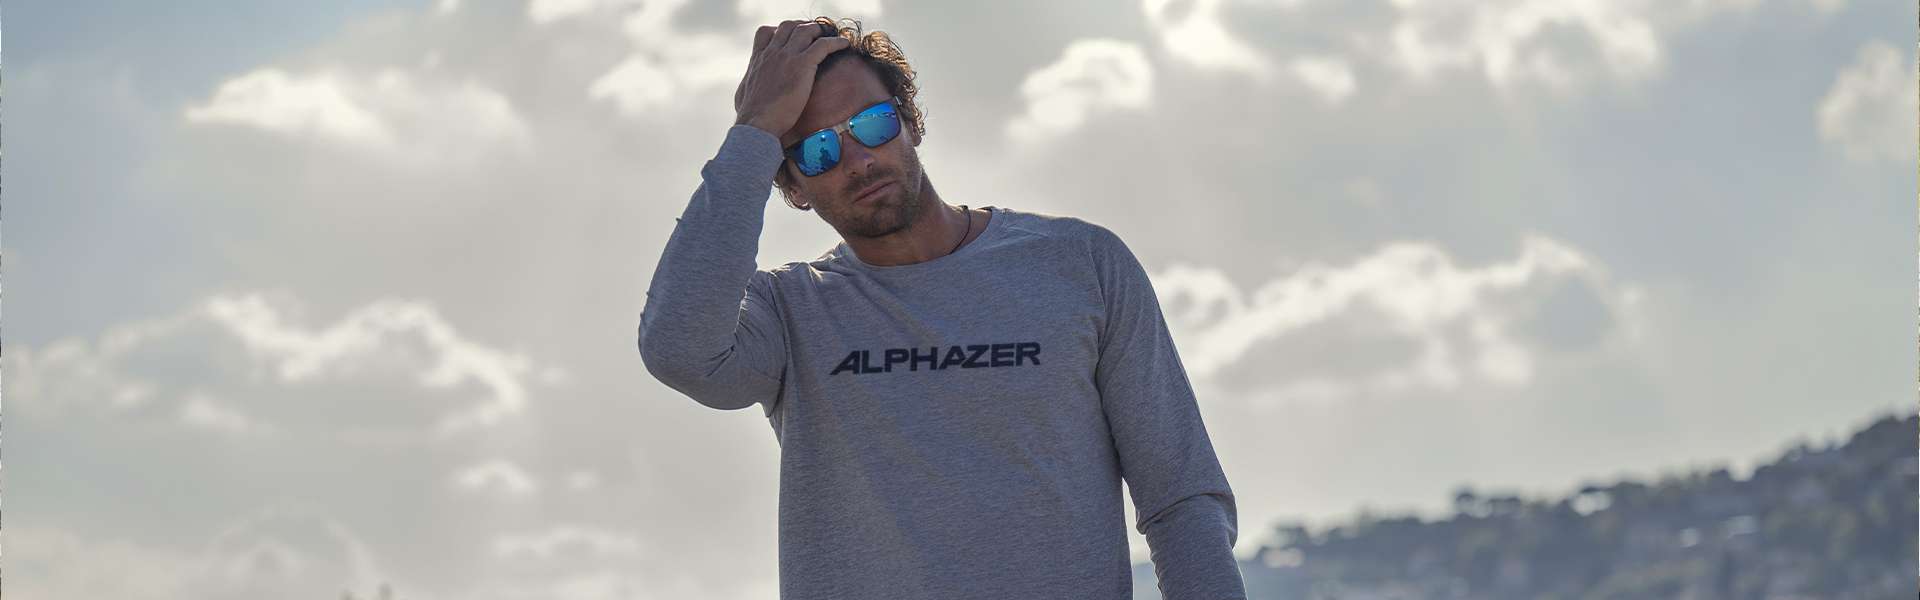 Interviste: Alphazer TALK con Matteo Iachino